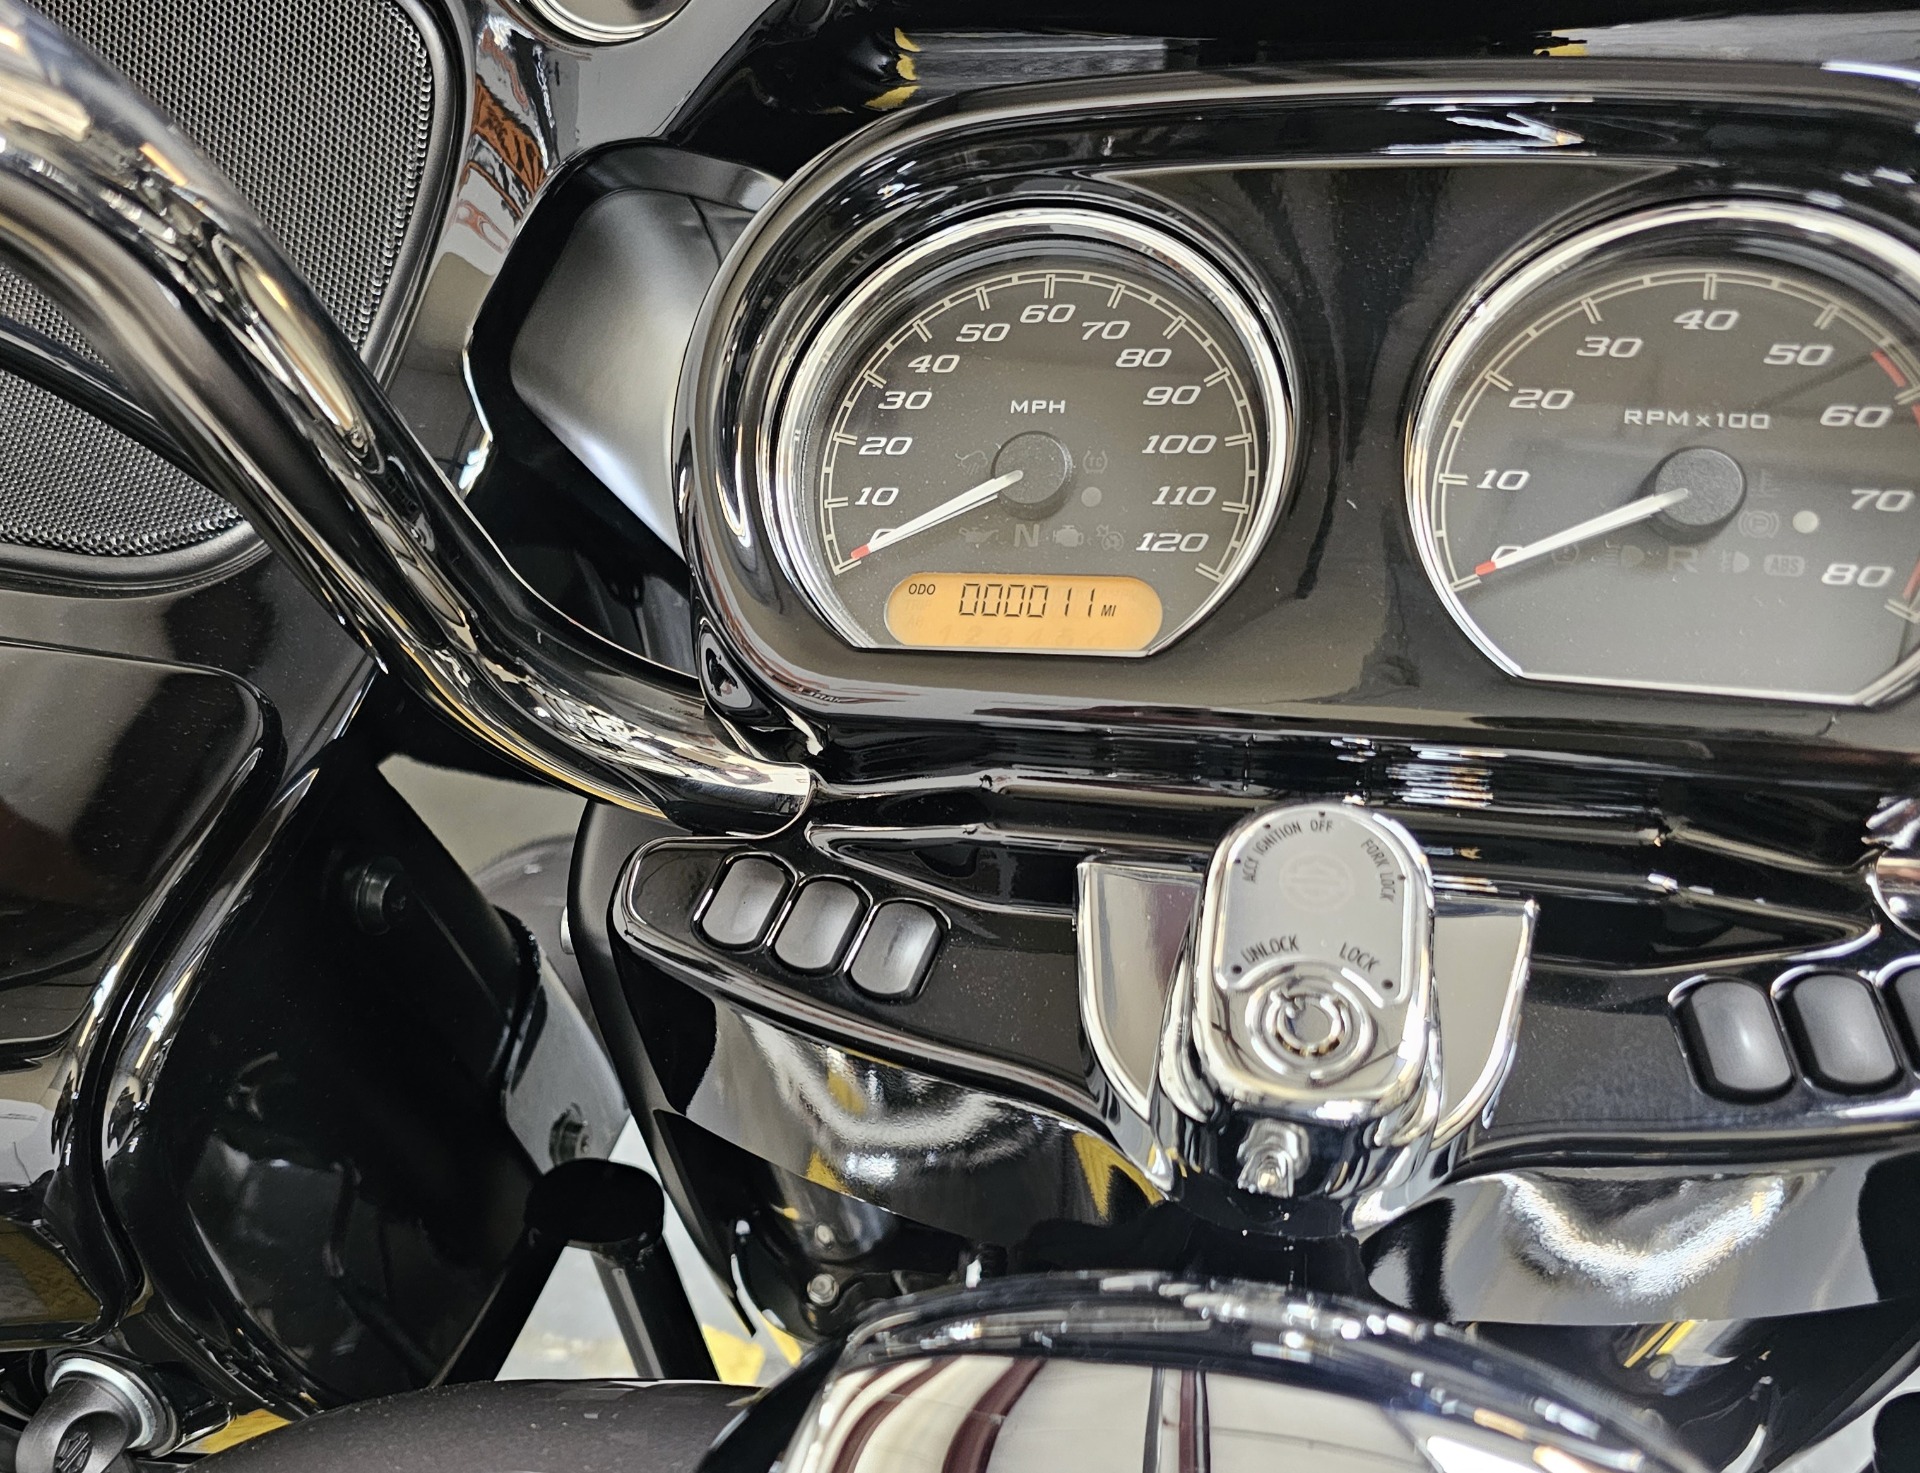 2023 Harley-Davidson Road Glide® Special in Scott, Louisiana - Photo 9